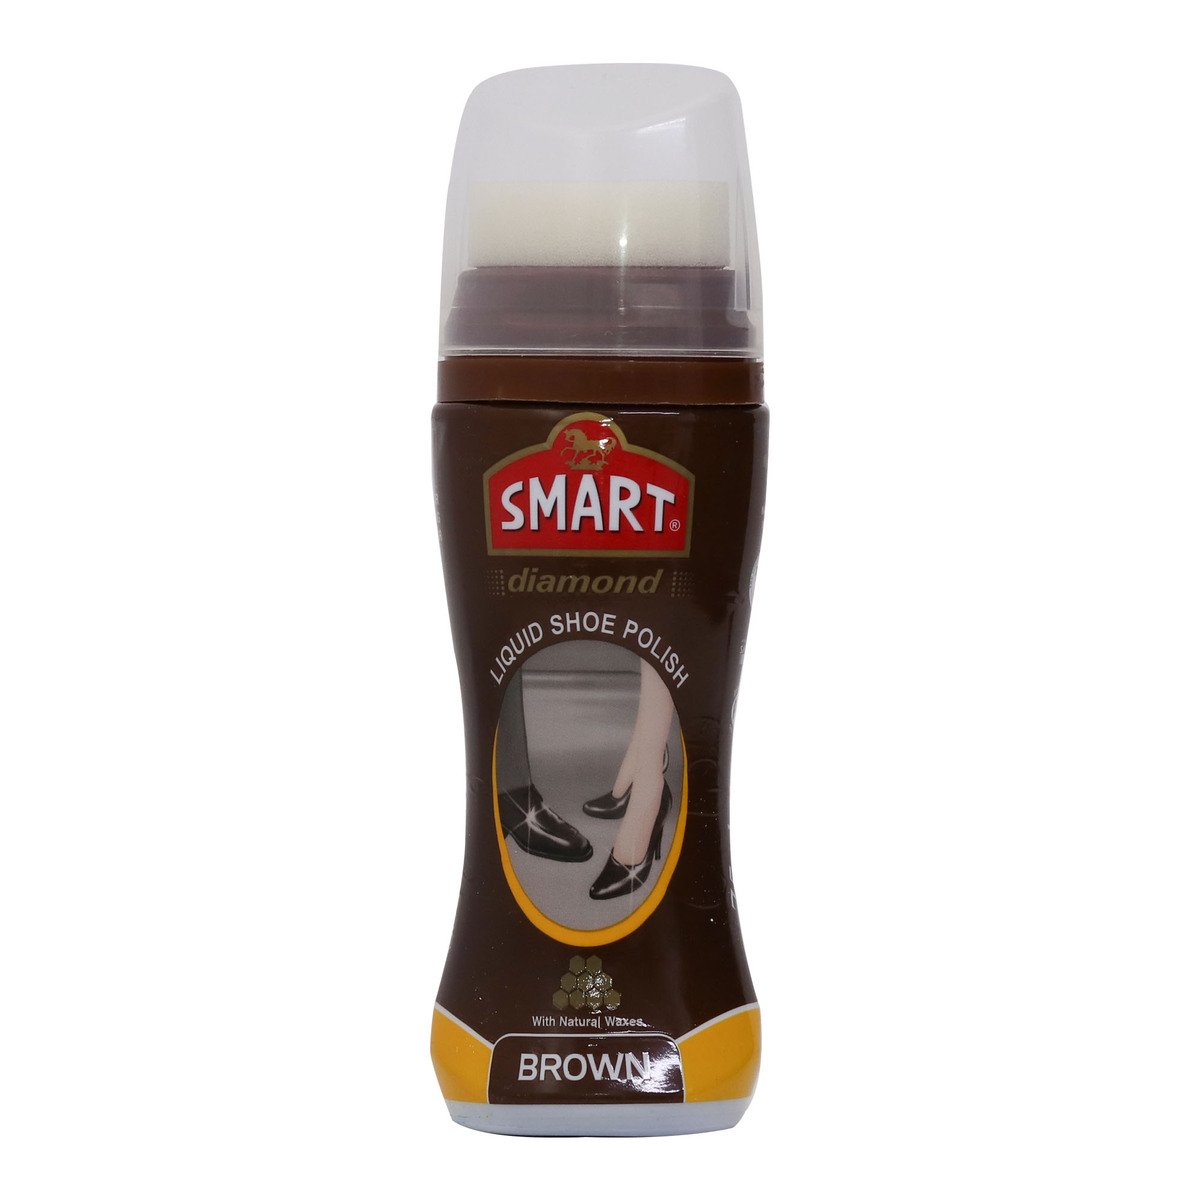 Smart Liquid Shoe Polish Brown 75ml